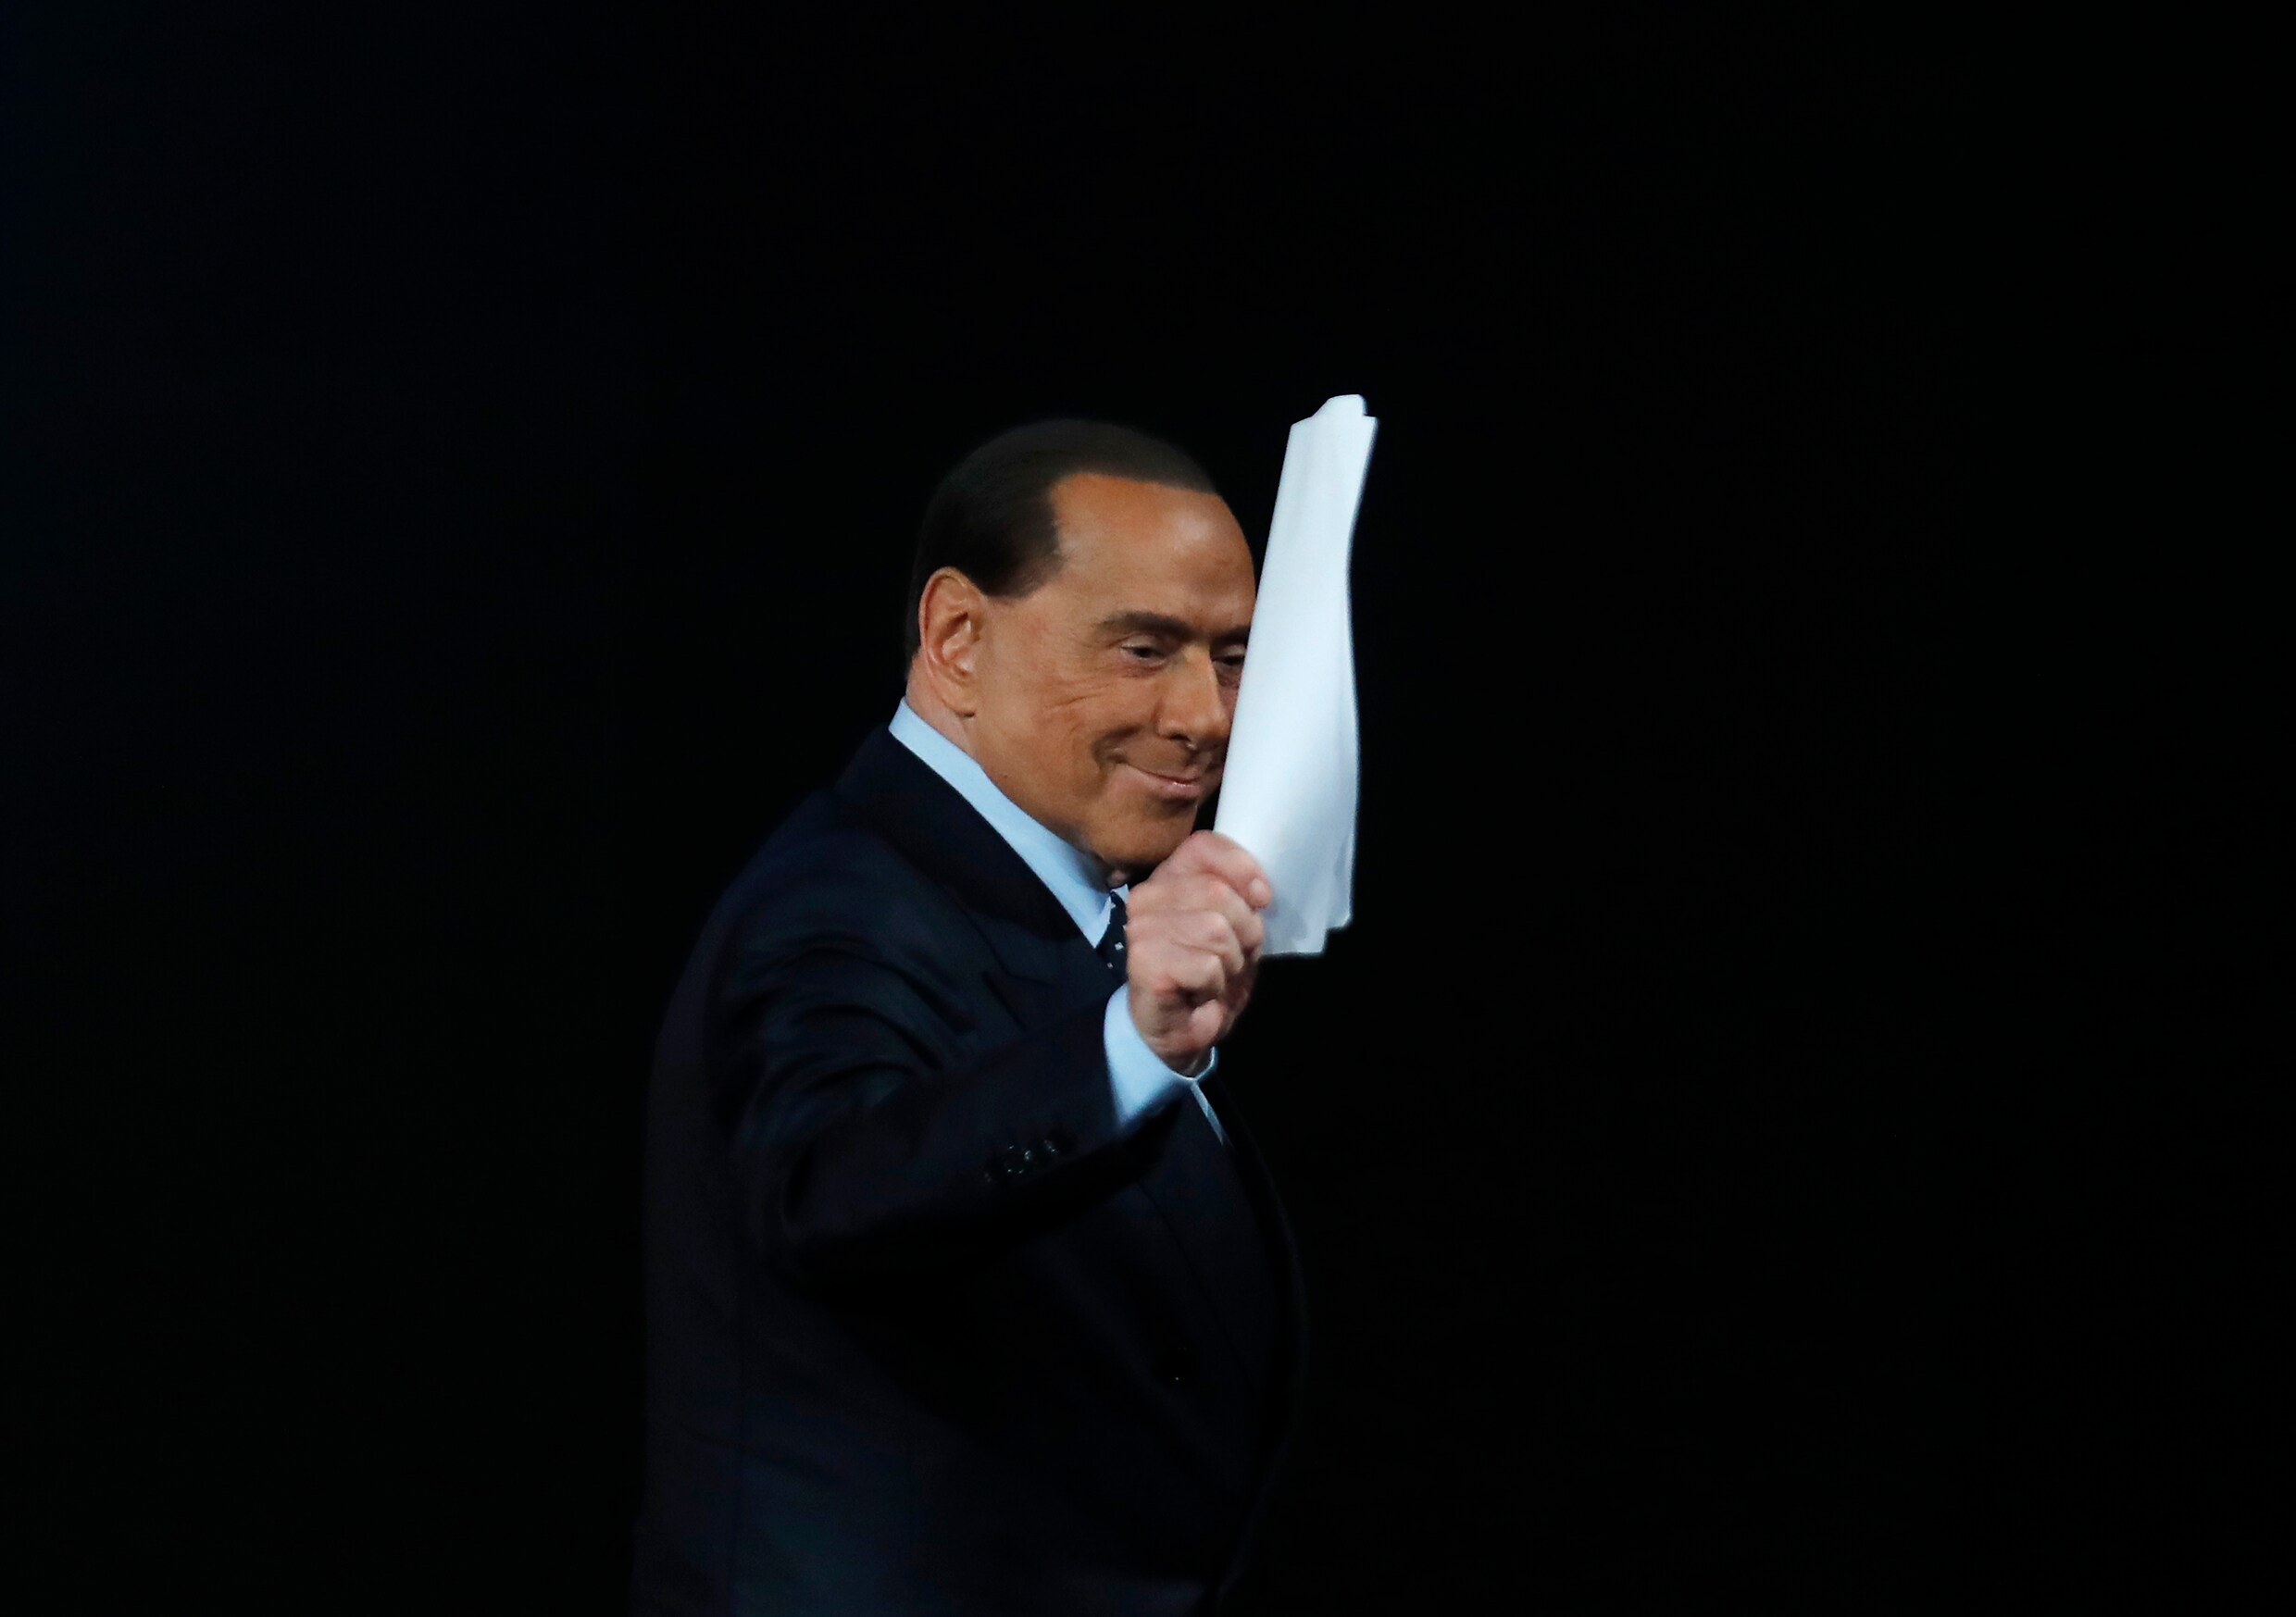 Silvio Berlusconi stapt uit Italiaanse presidentsrace